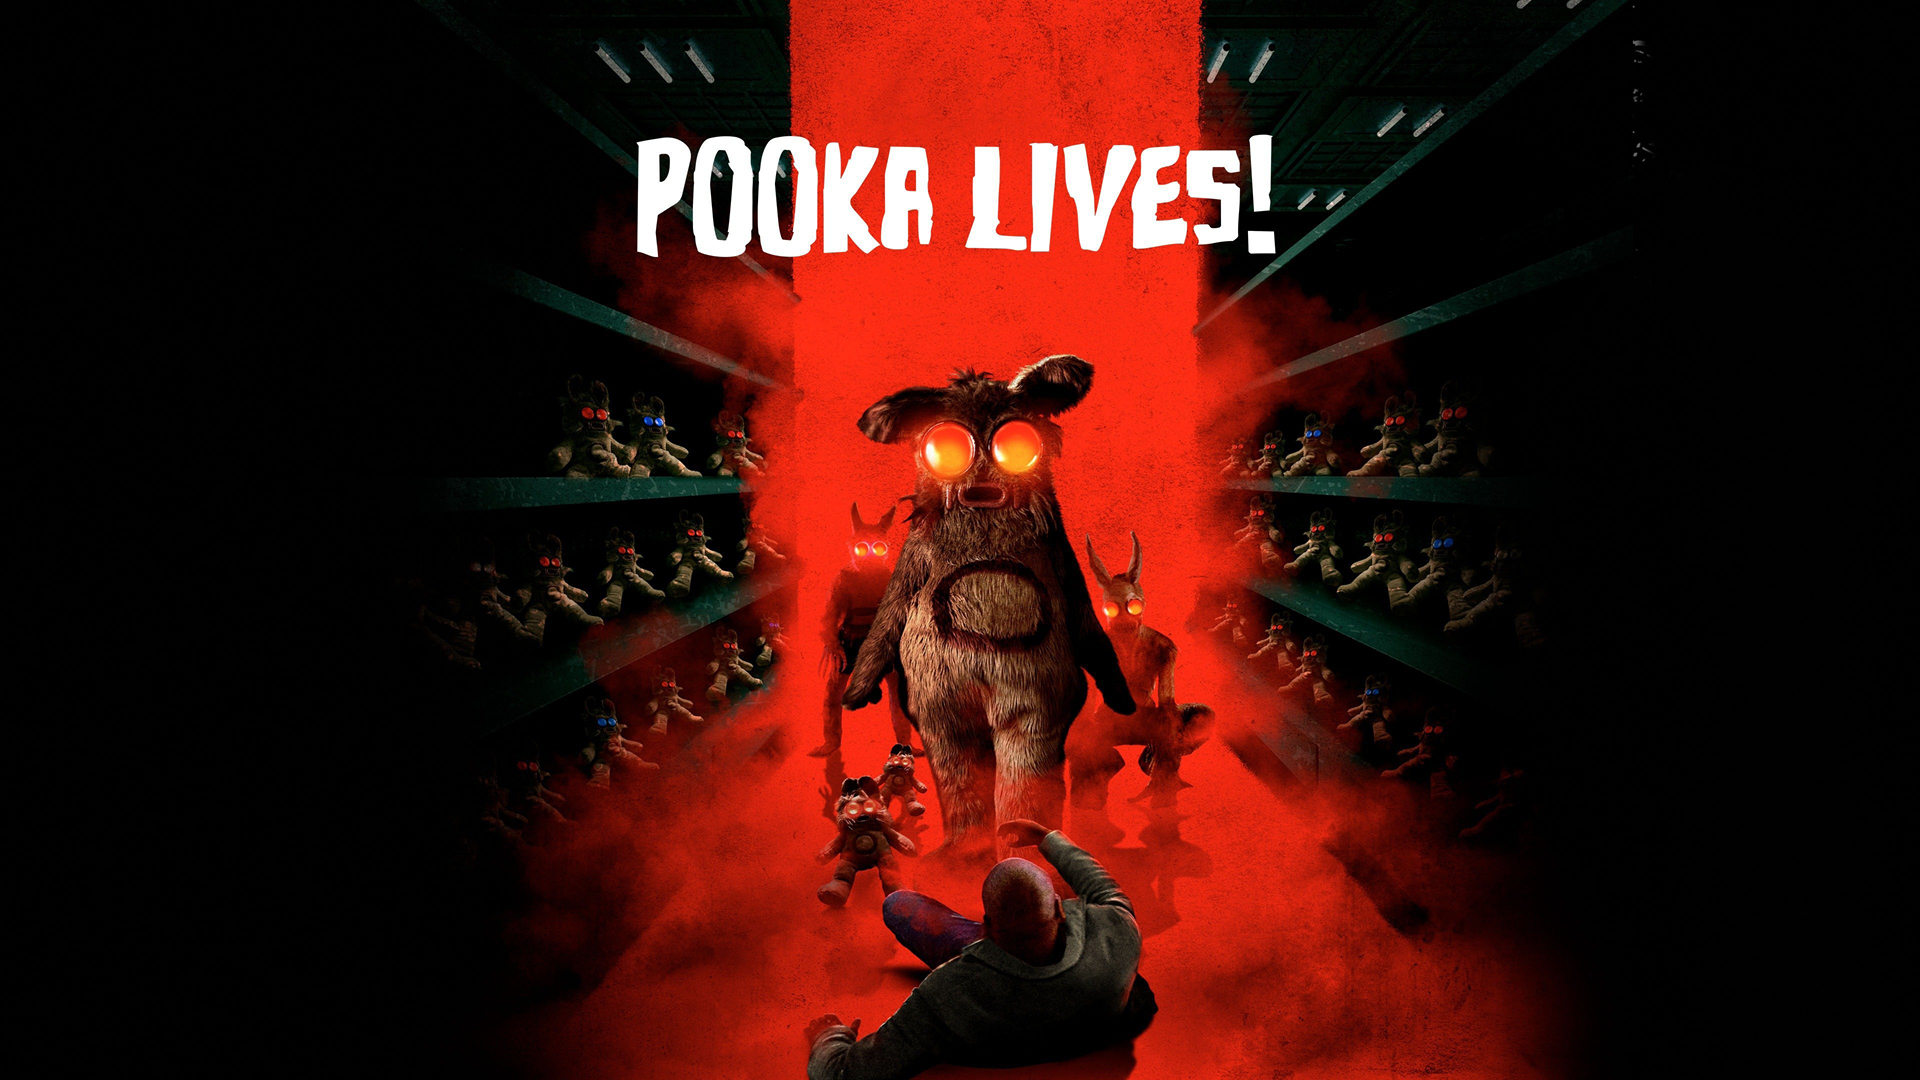 Into The Dark: Pooka Lives!